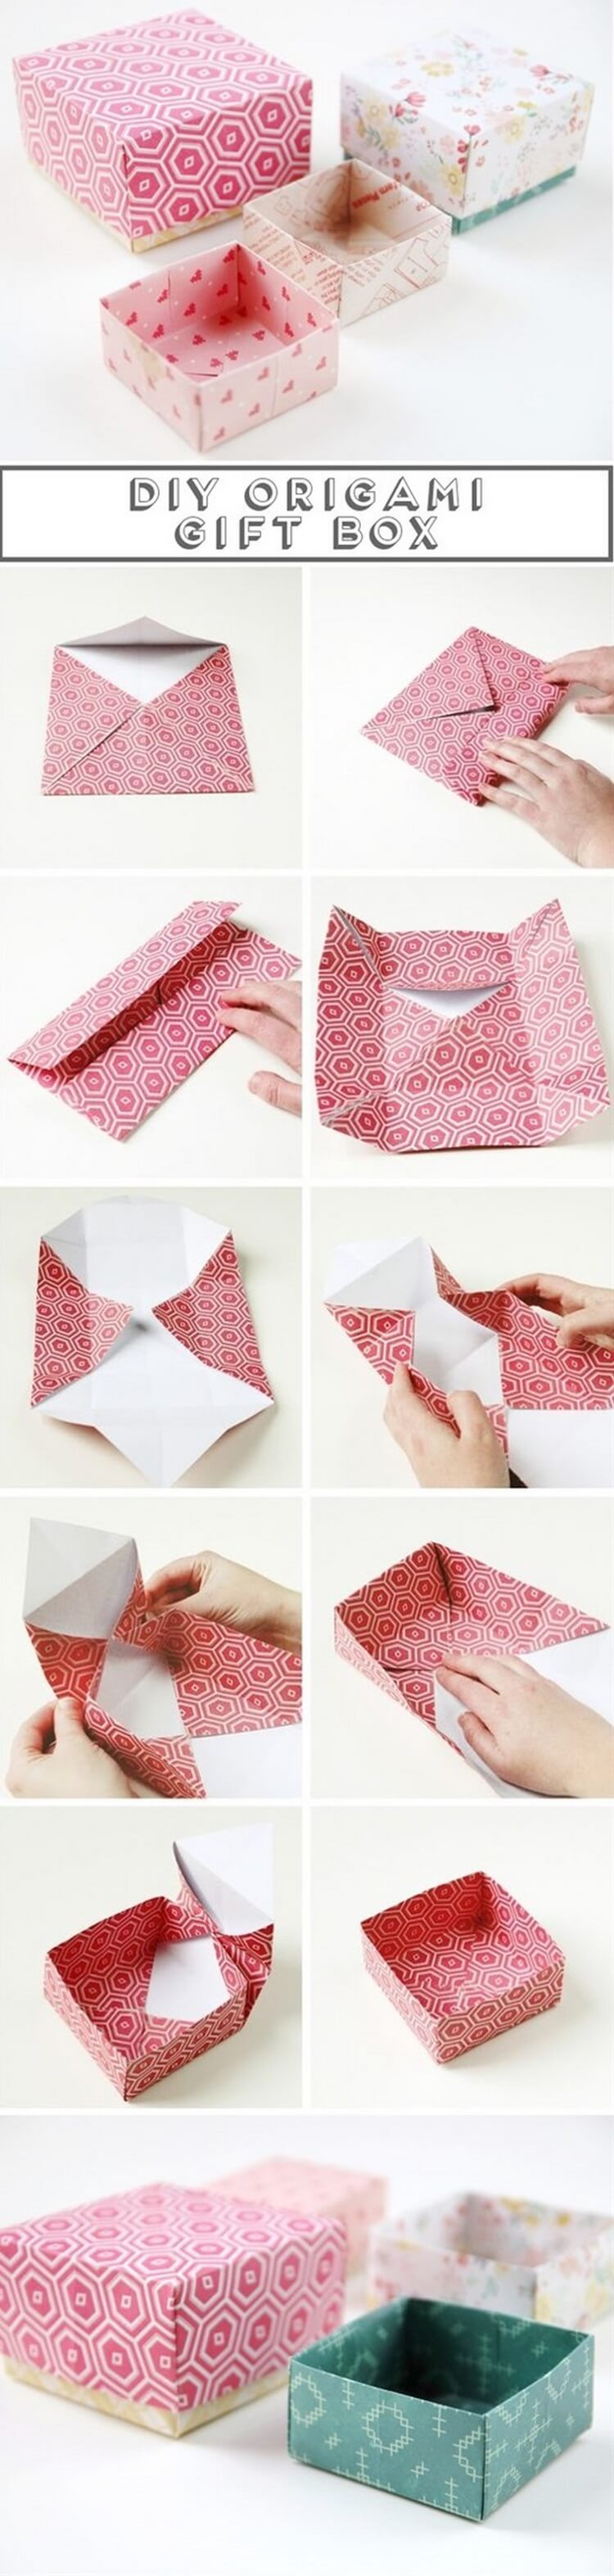 Завернуть подарки пошагово. Упаковка подарка в бумагу без коробки. Оригами подарок. Оригами упаковка для подарка. Оригами коробочка для подарка.